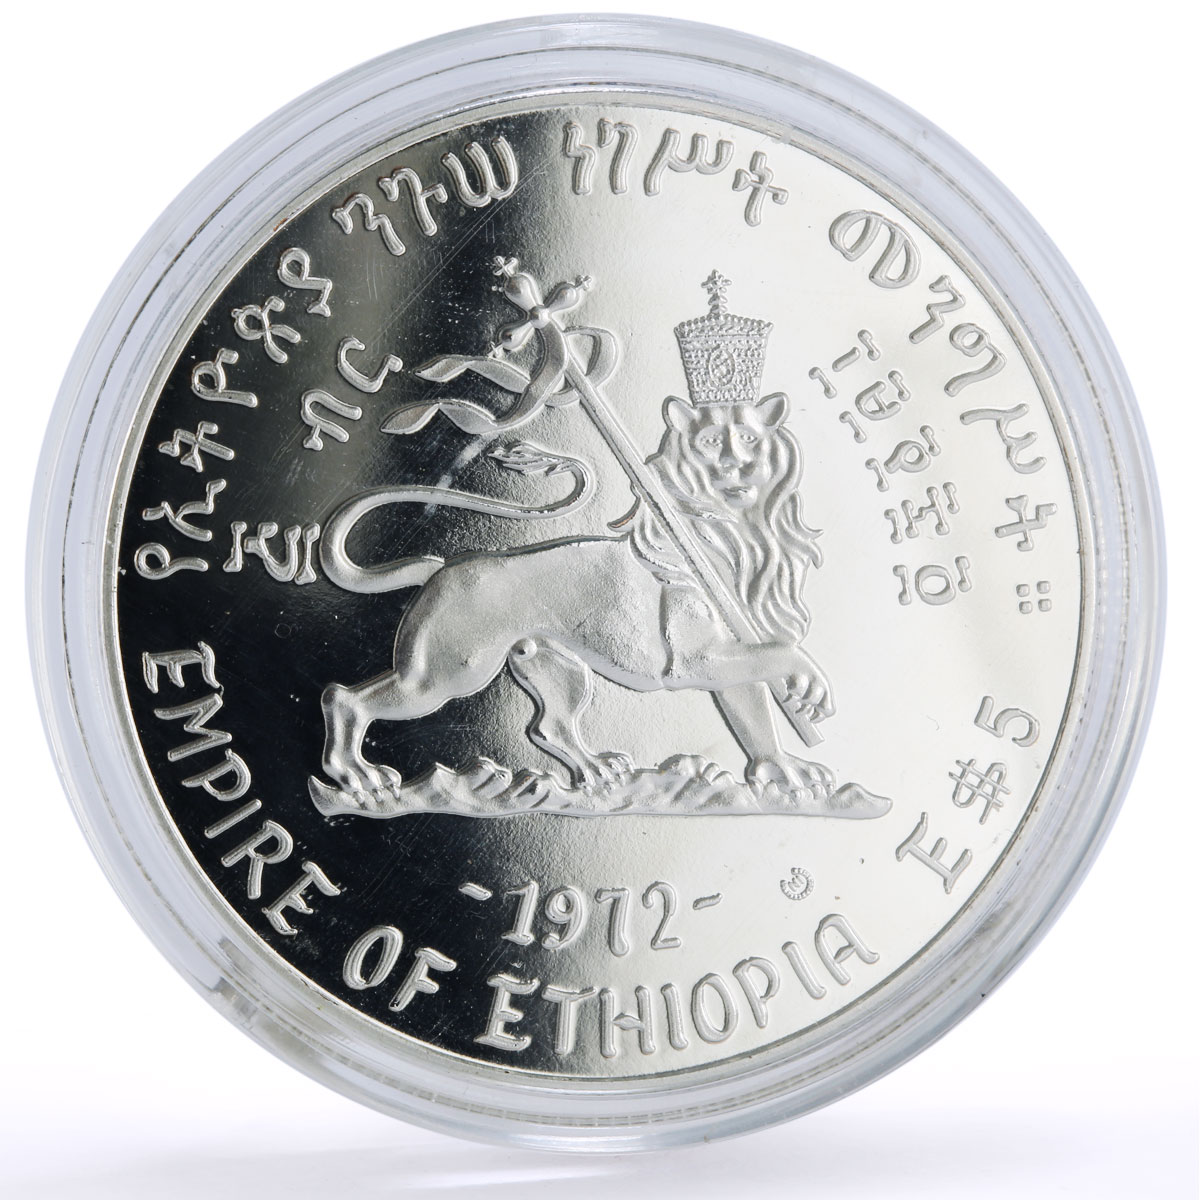 Ethiopia 5 dollars Emperor Menelik II Politics KM-50 proof silver coin 1972